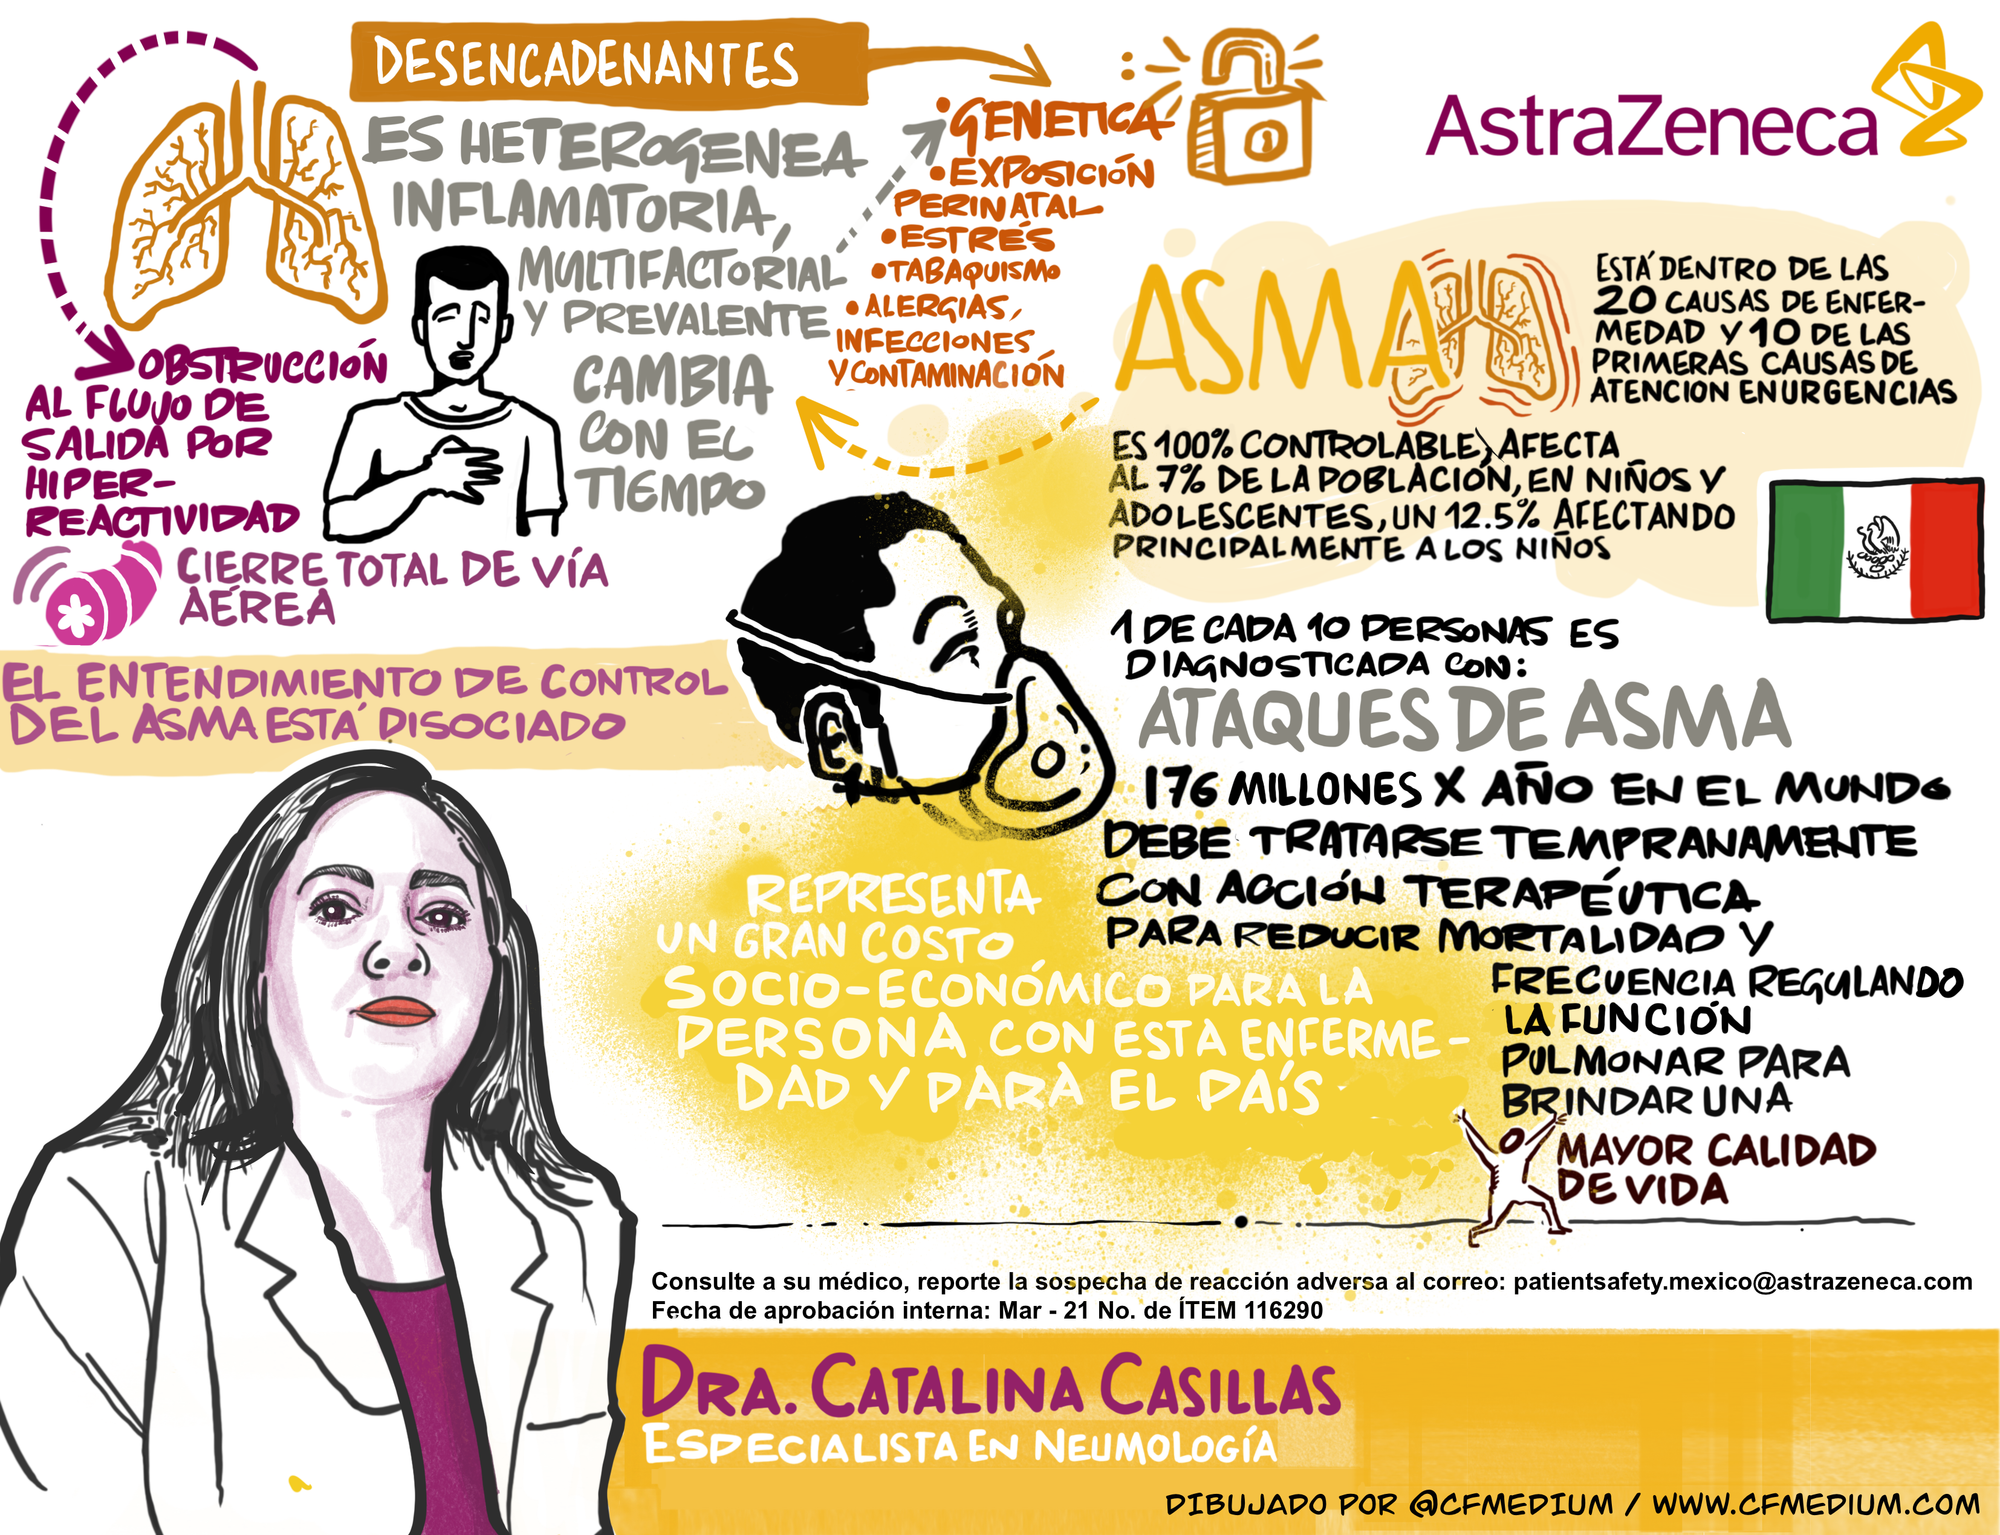 AstraZeneca: La importancia del manejo del ASMA